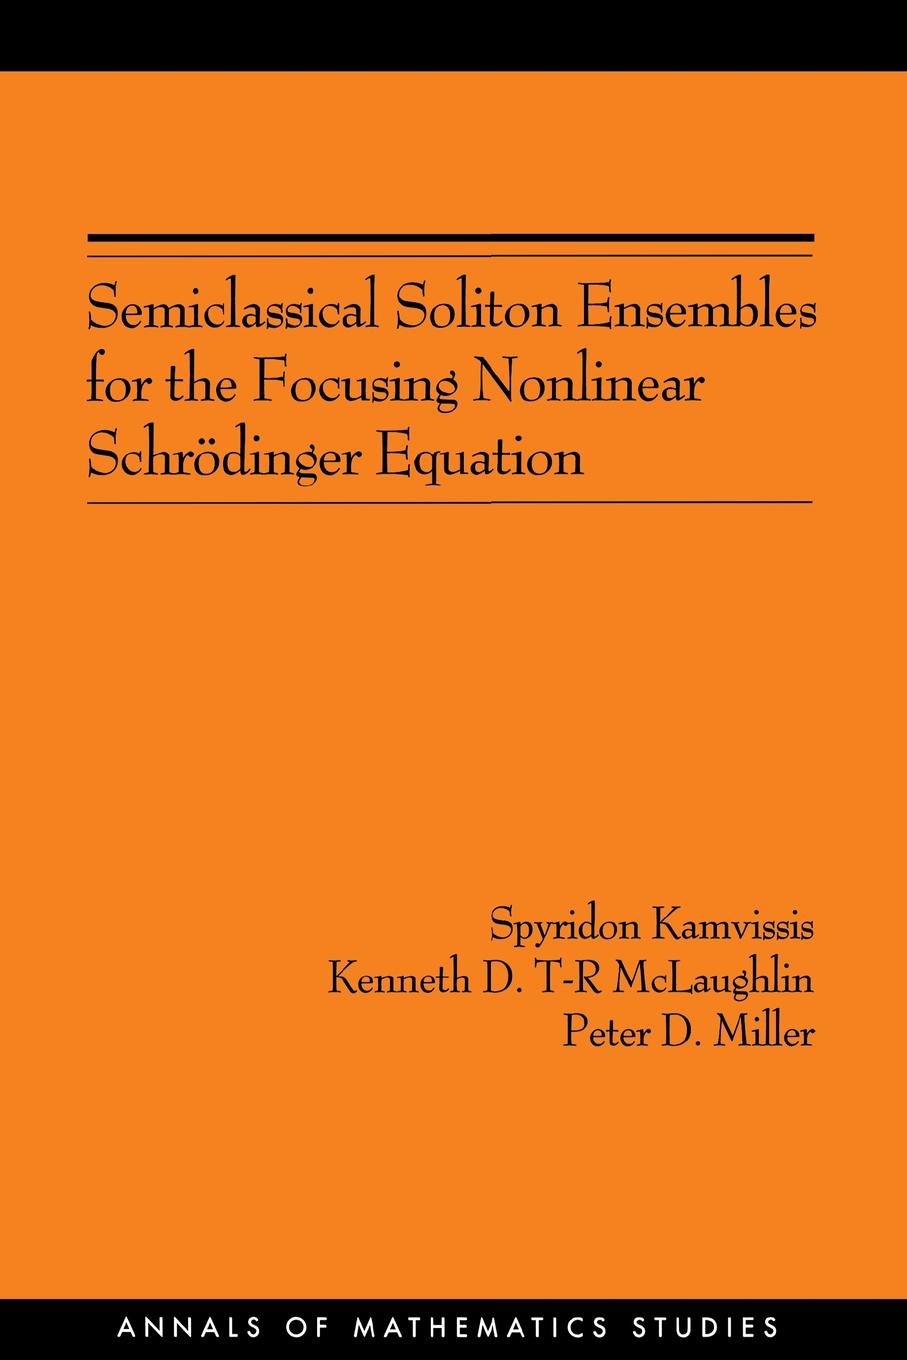 Semiclassical Soliton Ensembles for the Focusing Nonlinear Schrodinger Equation (AM-154)